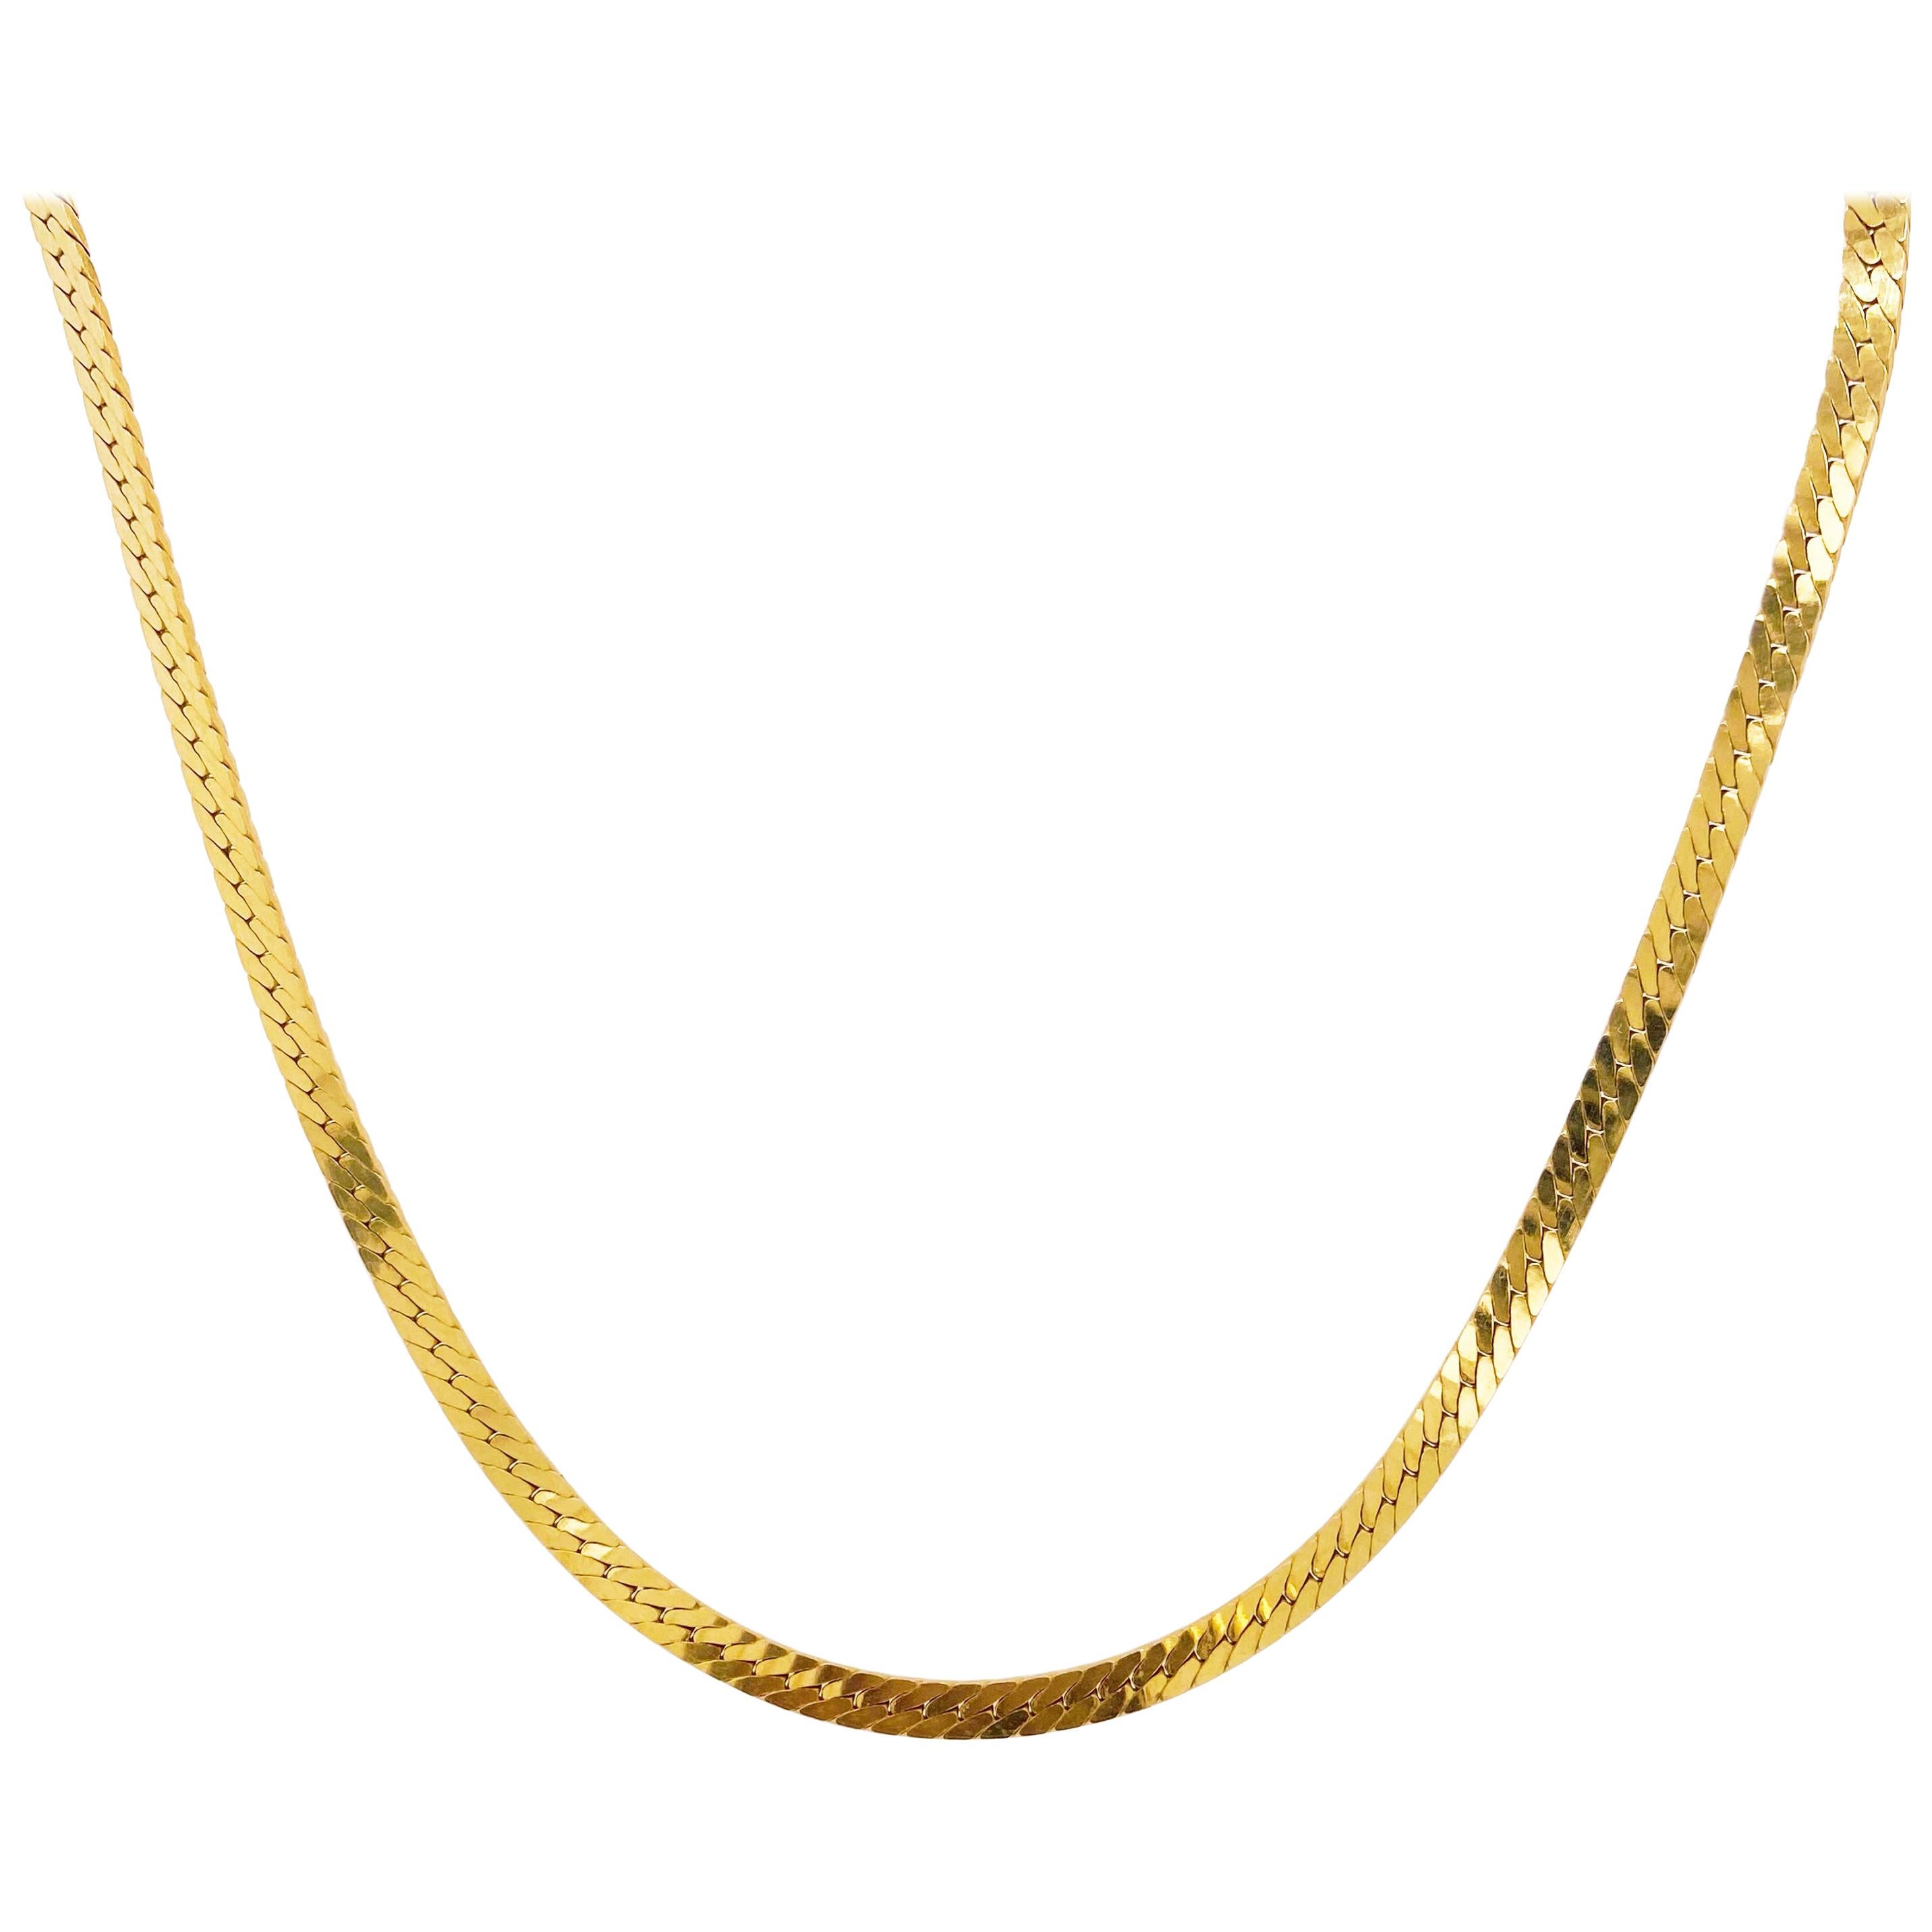 Gold Herringbone Chain in 14 Karat Yellow Gold, Flat Wide Chain